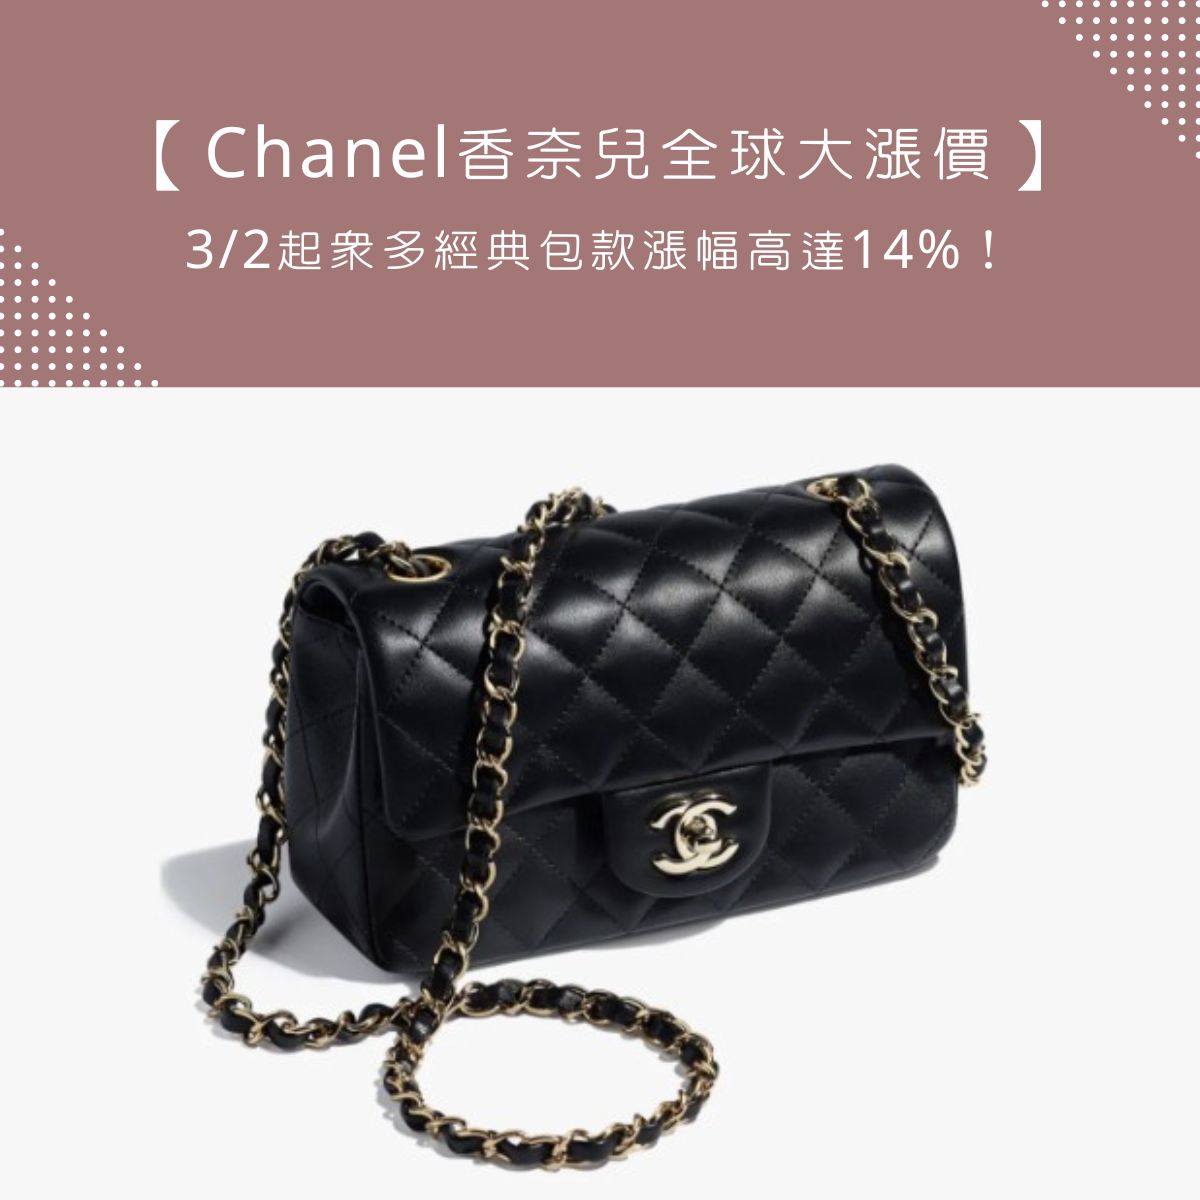 【Chanel香奈兒全球大漲價】3/2起眾多經典包款漲幅高達14%！